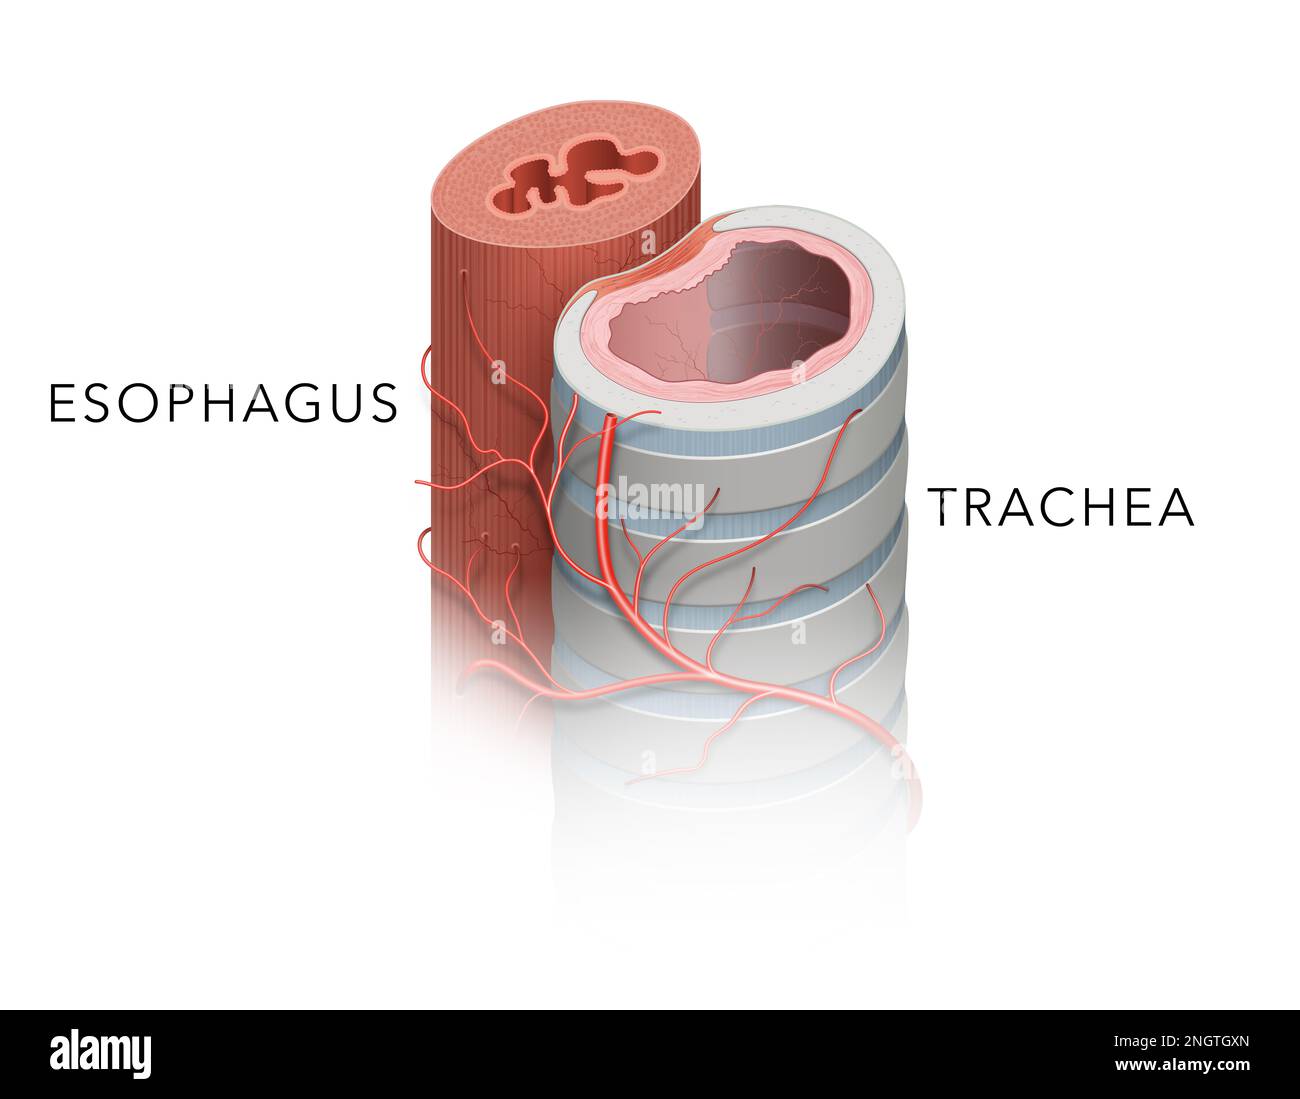 Anatomy of Trachea and Esophagus Stock Photo